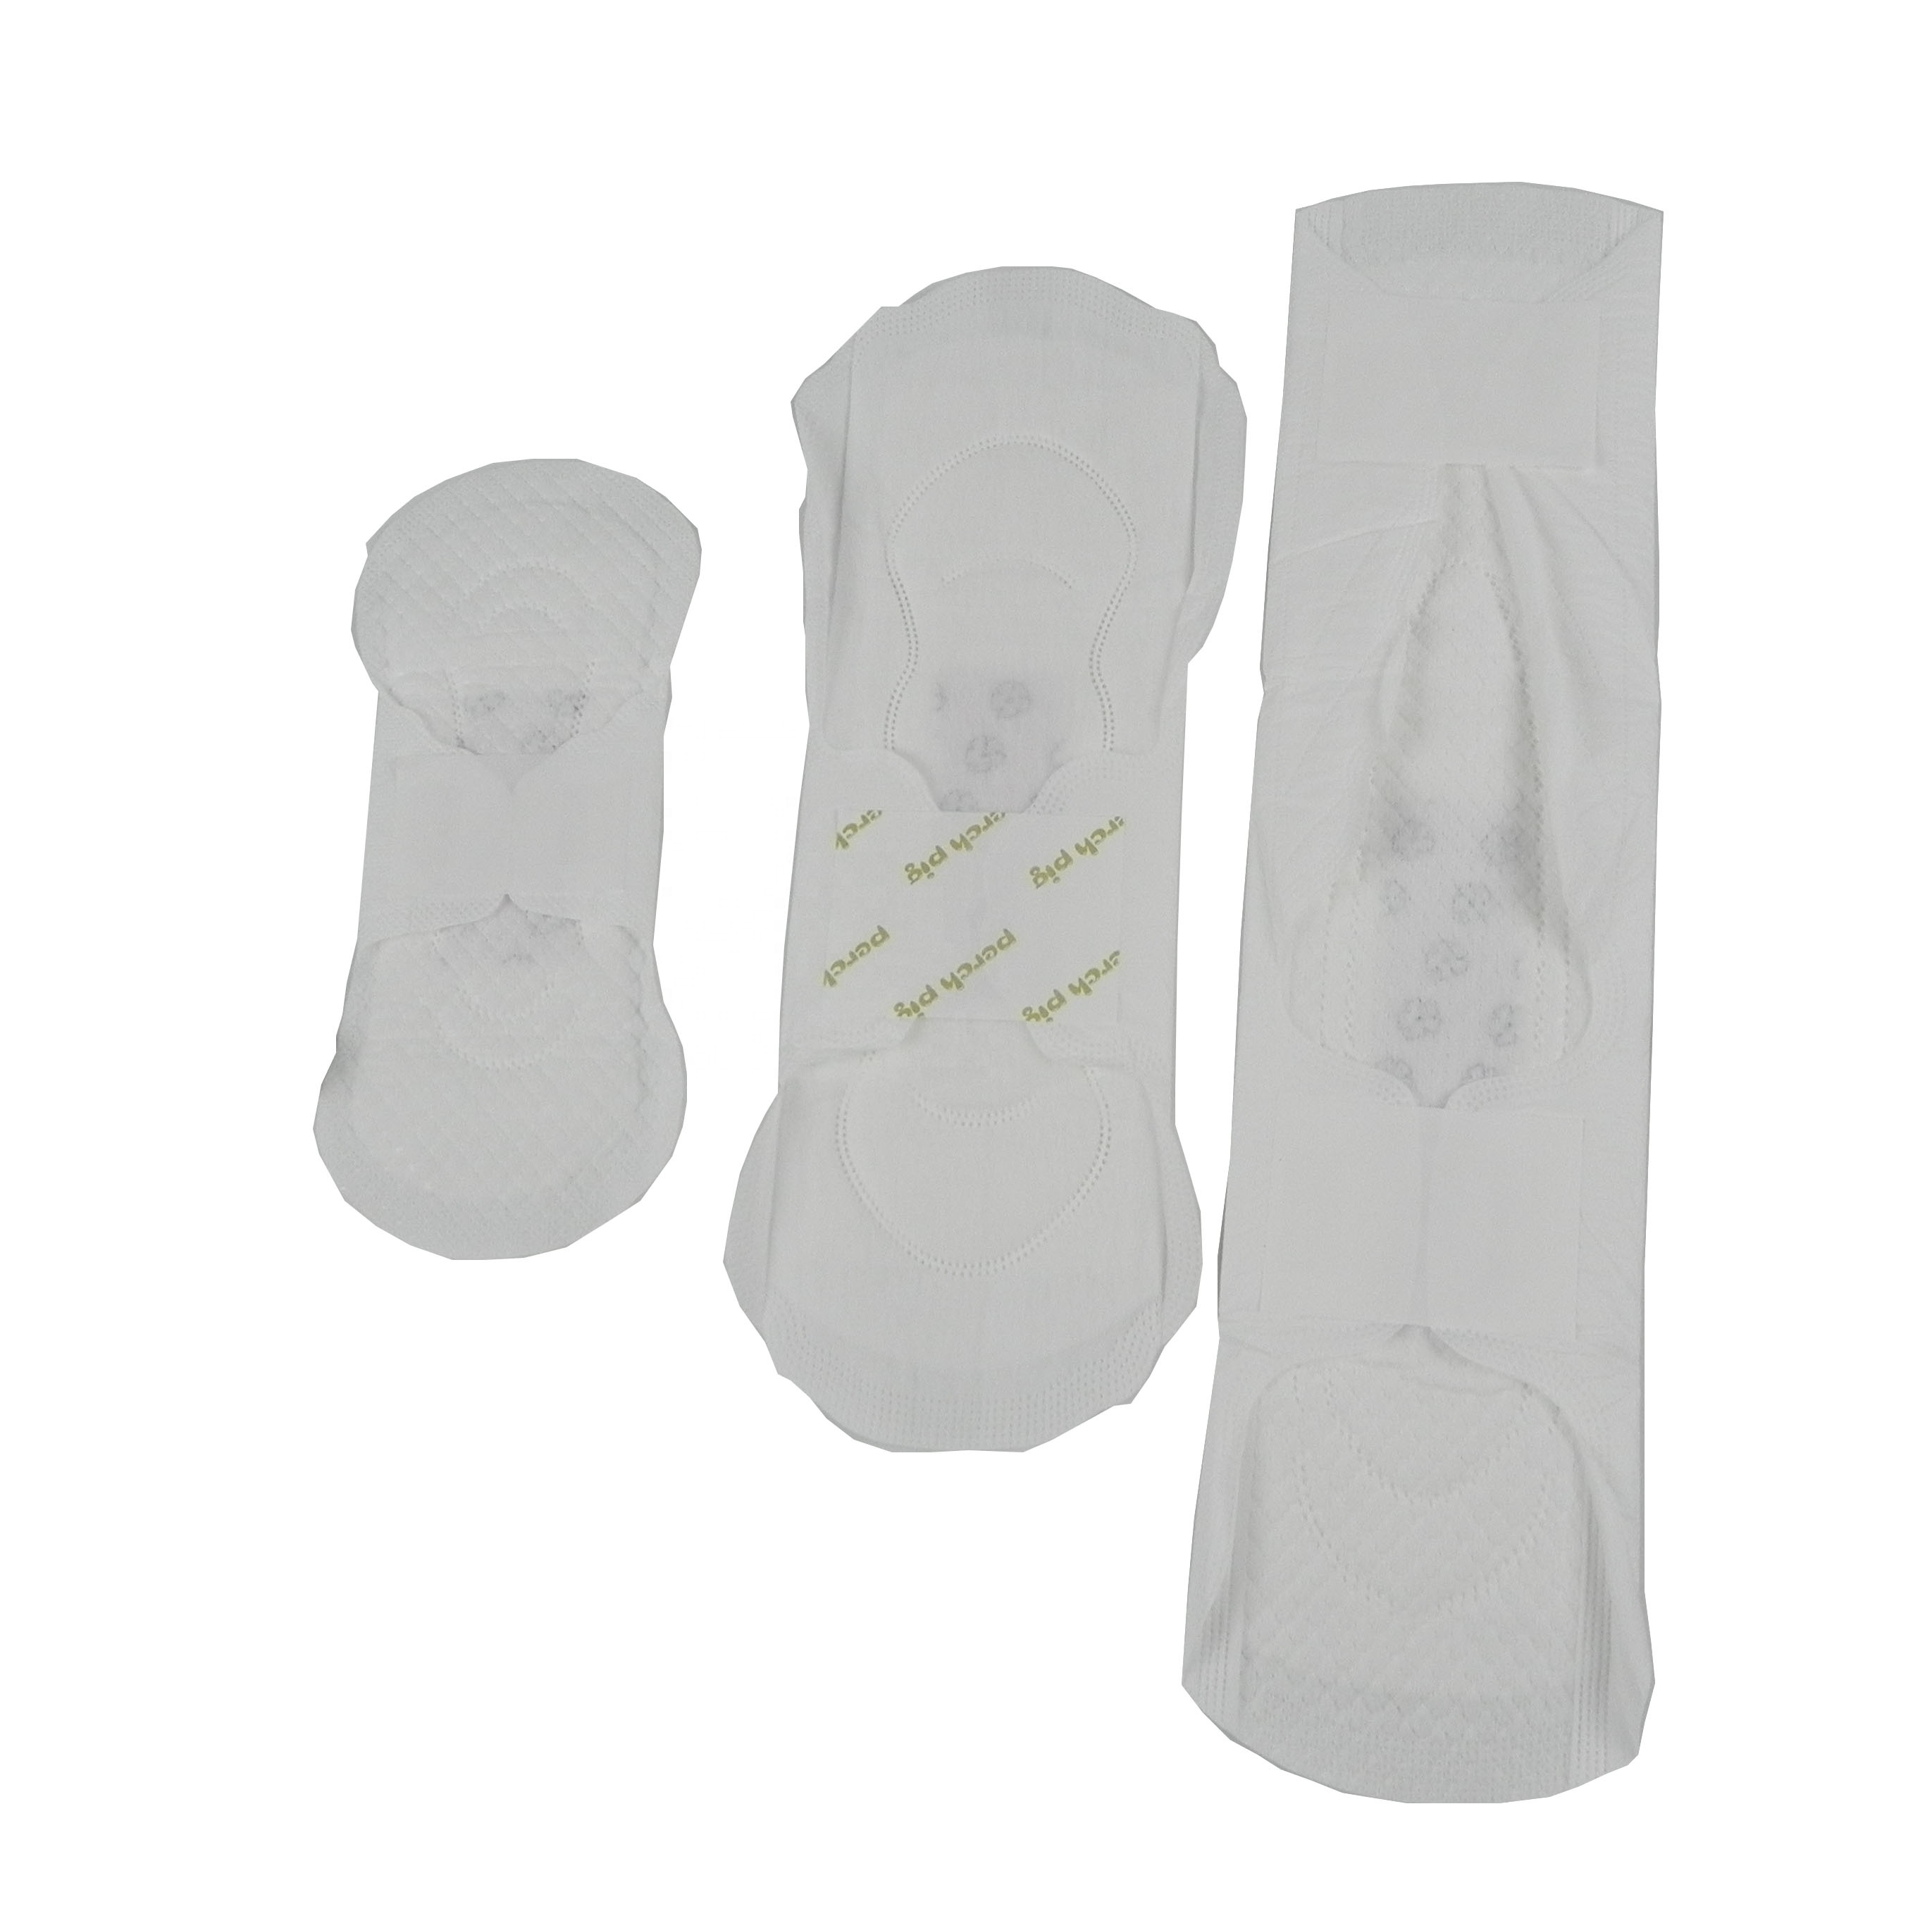 High definition Sanitary Napkins Online - free sample Cotton comfort softness Lady Pad – Yoho